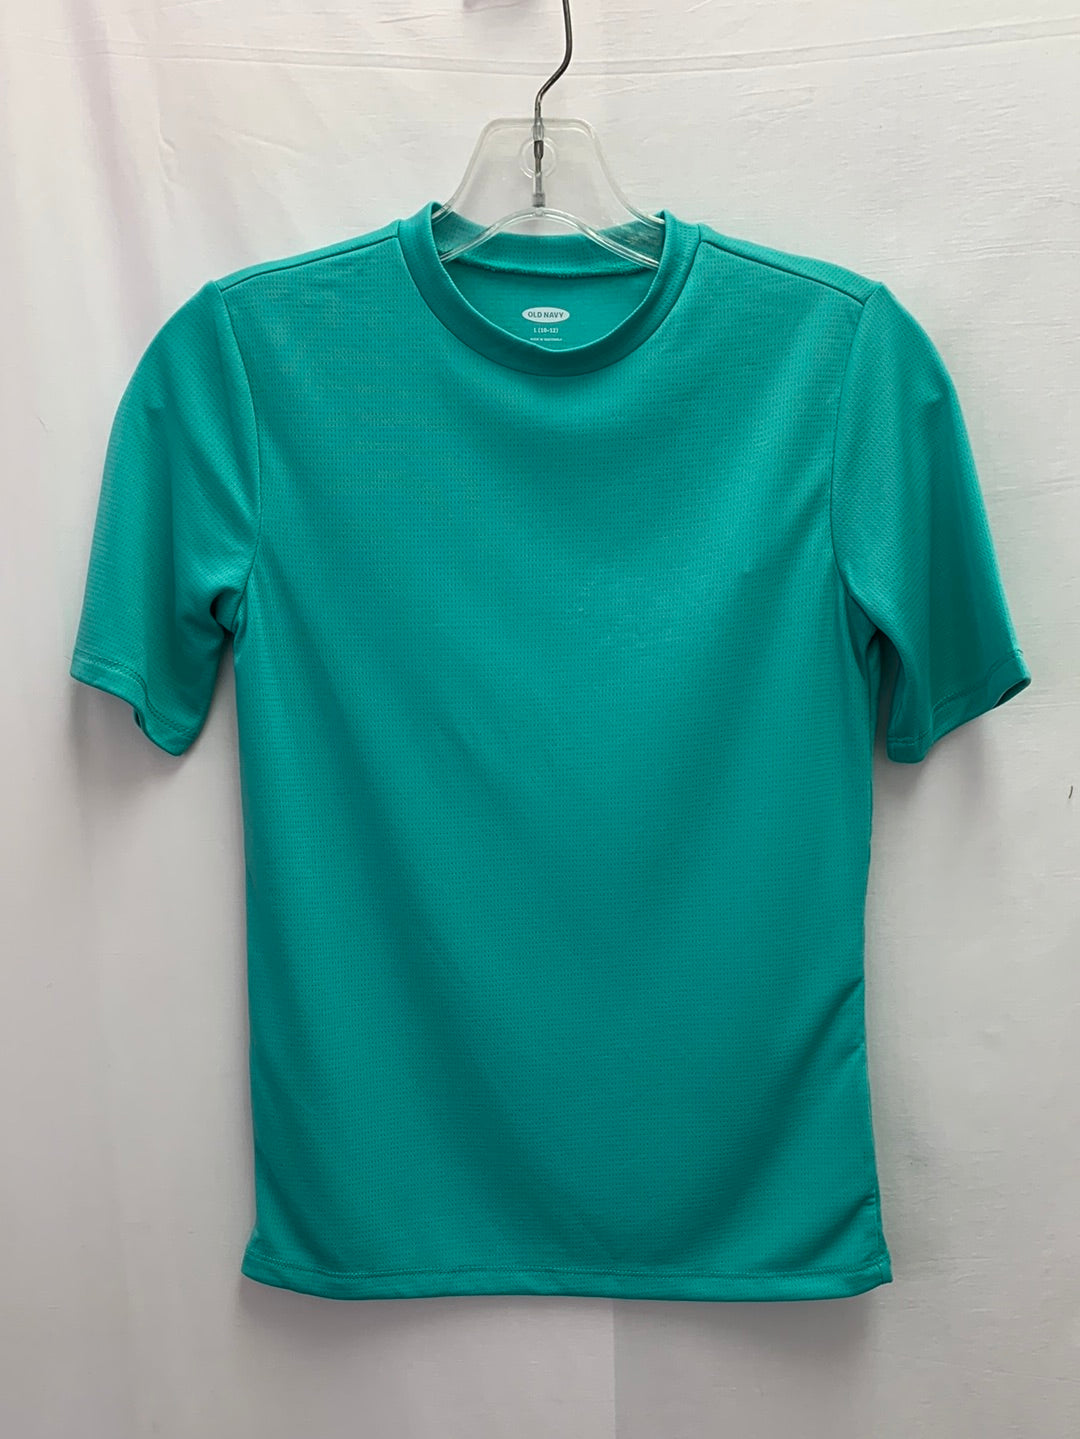 NWT - OLD NAVY aqua blue UPF 40 Short Sleeve Rashguard Swim Shirt - Youth 10-12